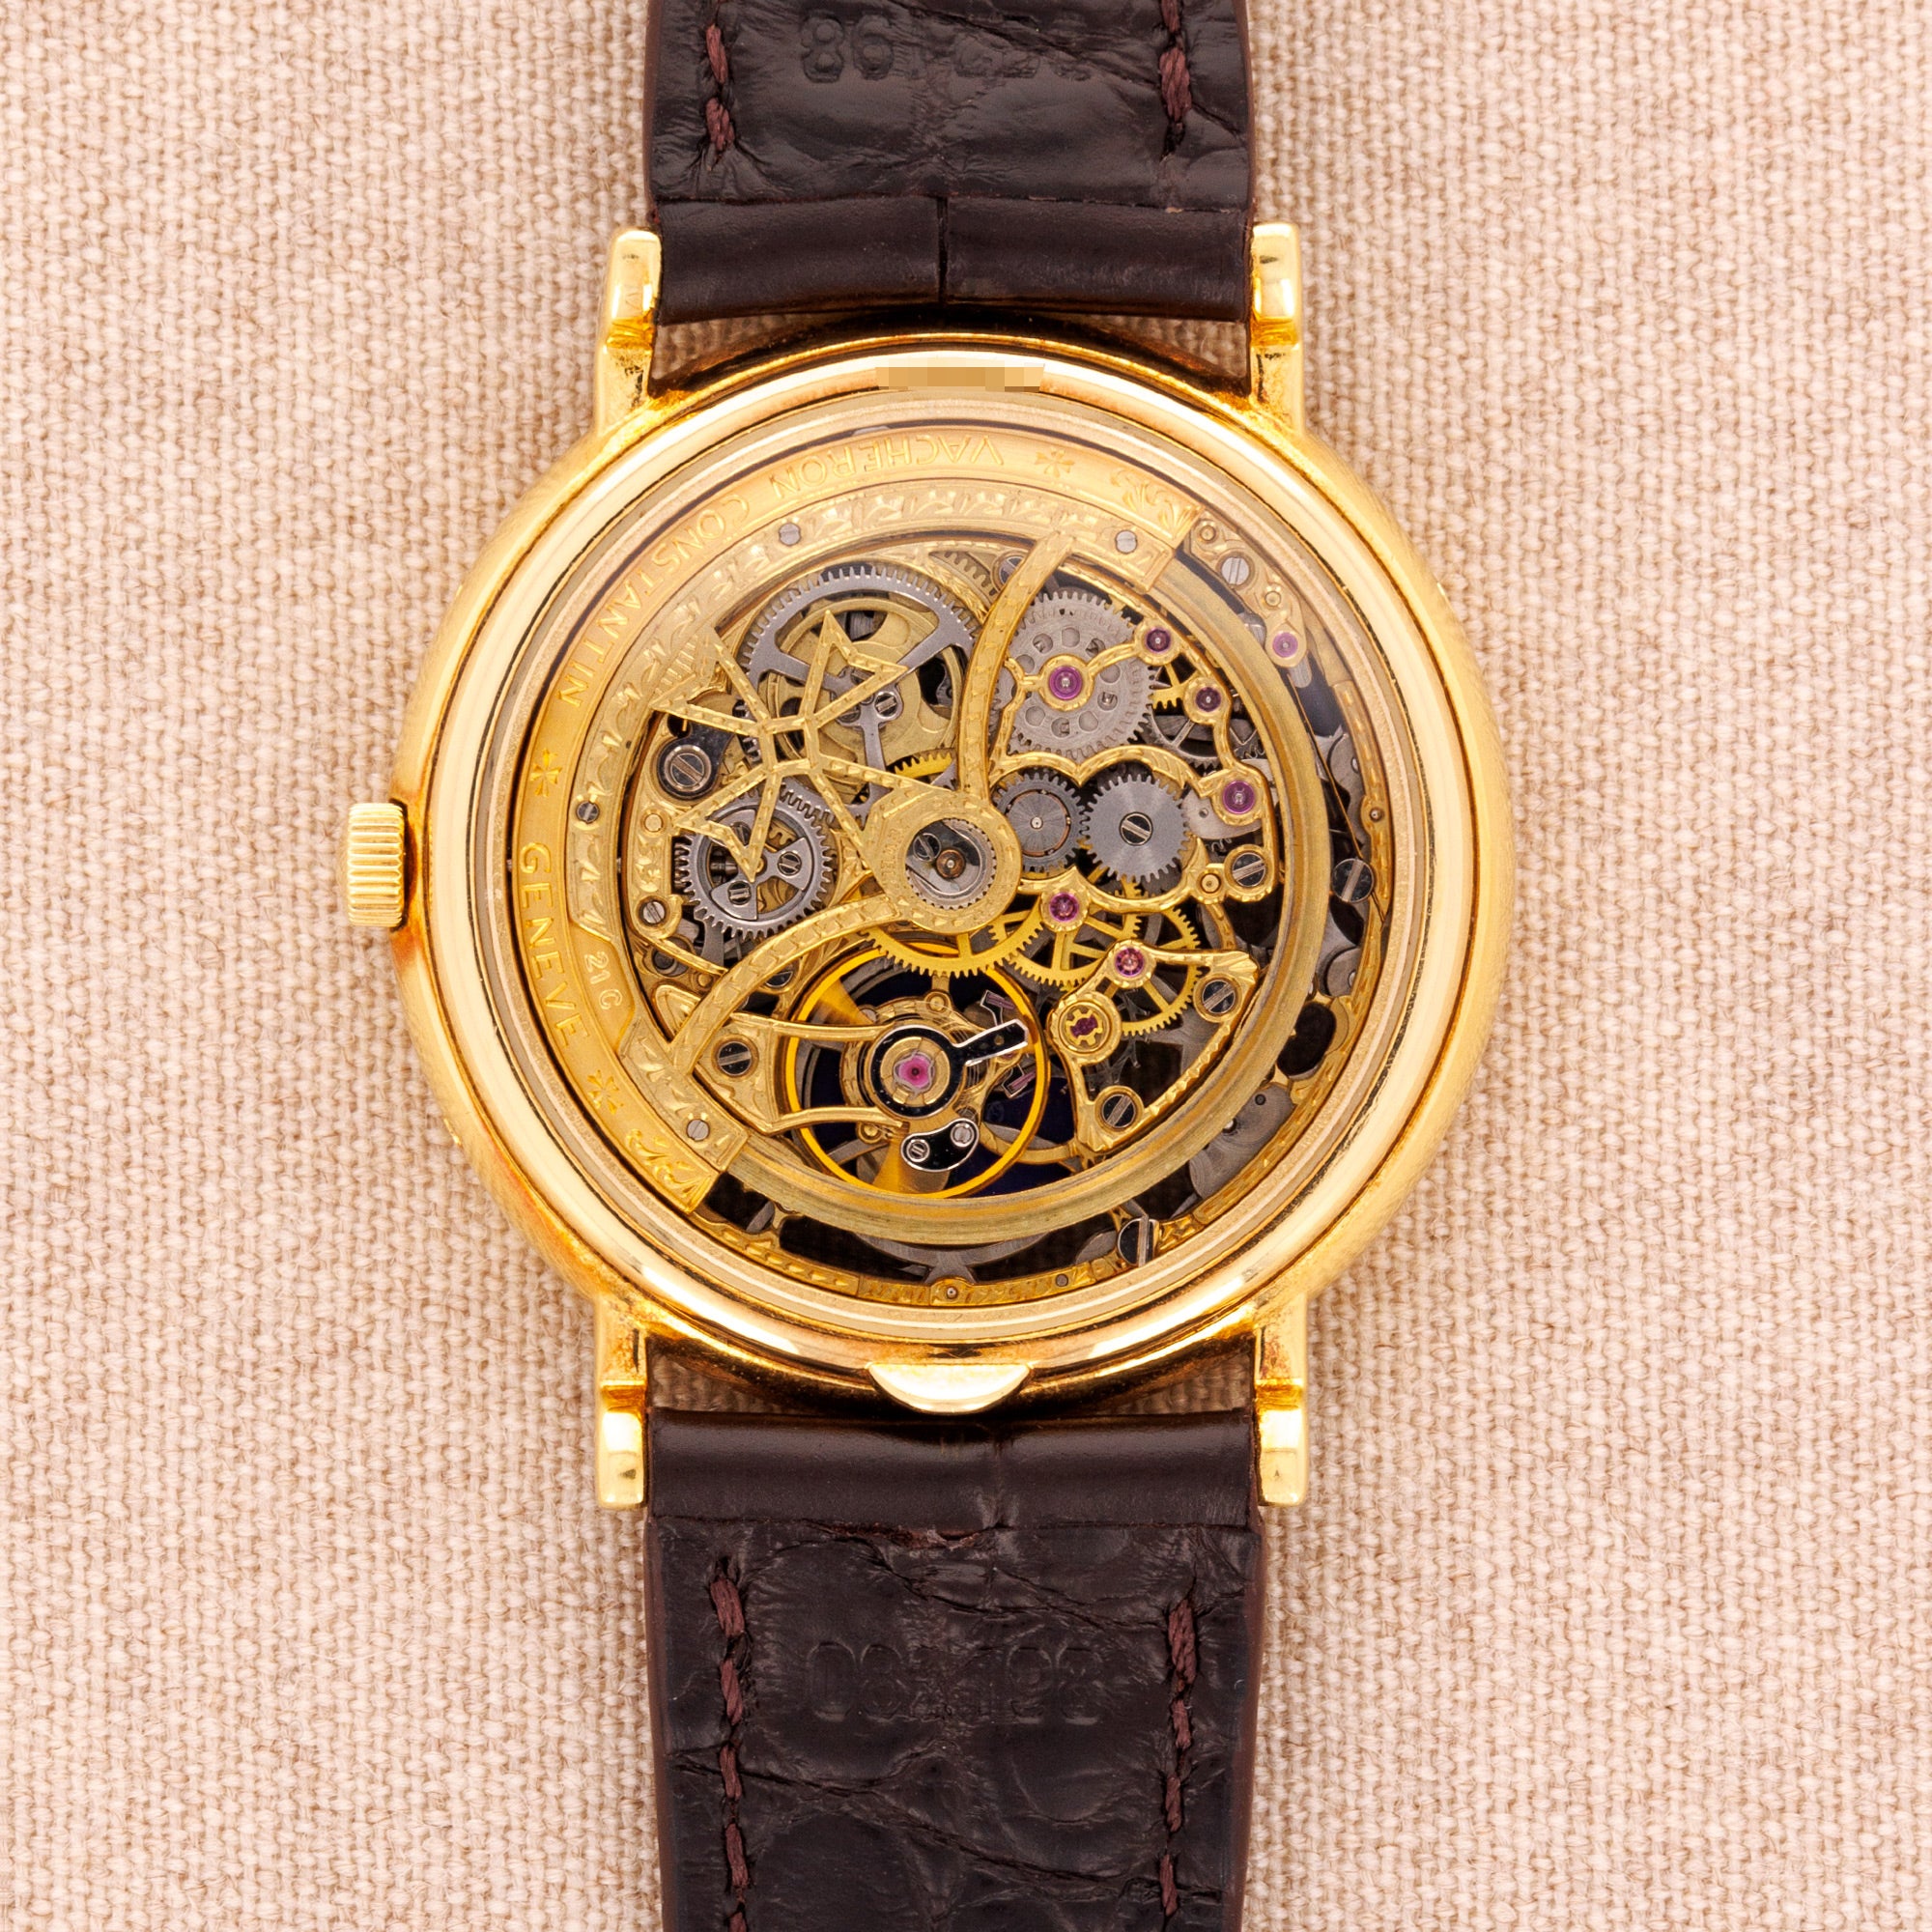 Vacheron Constantin - Vacheron Constantin Yellow Gold Perpetual Skeleton Ref. 43032 - The Keystone Watches